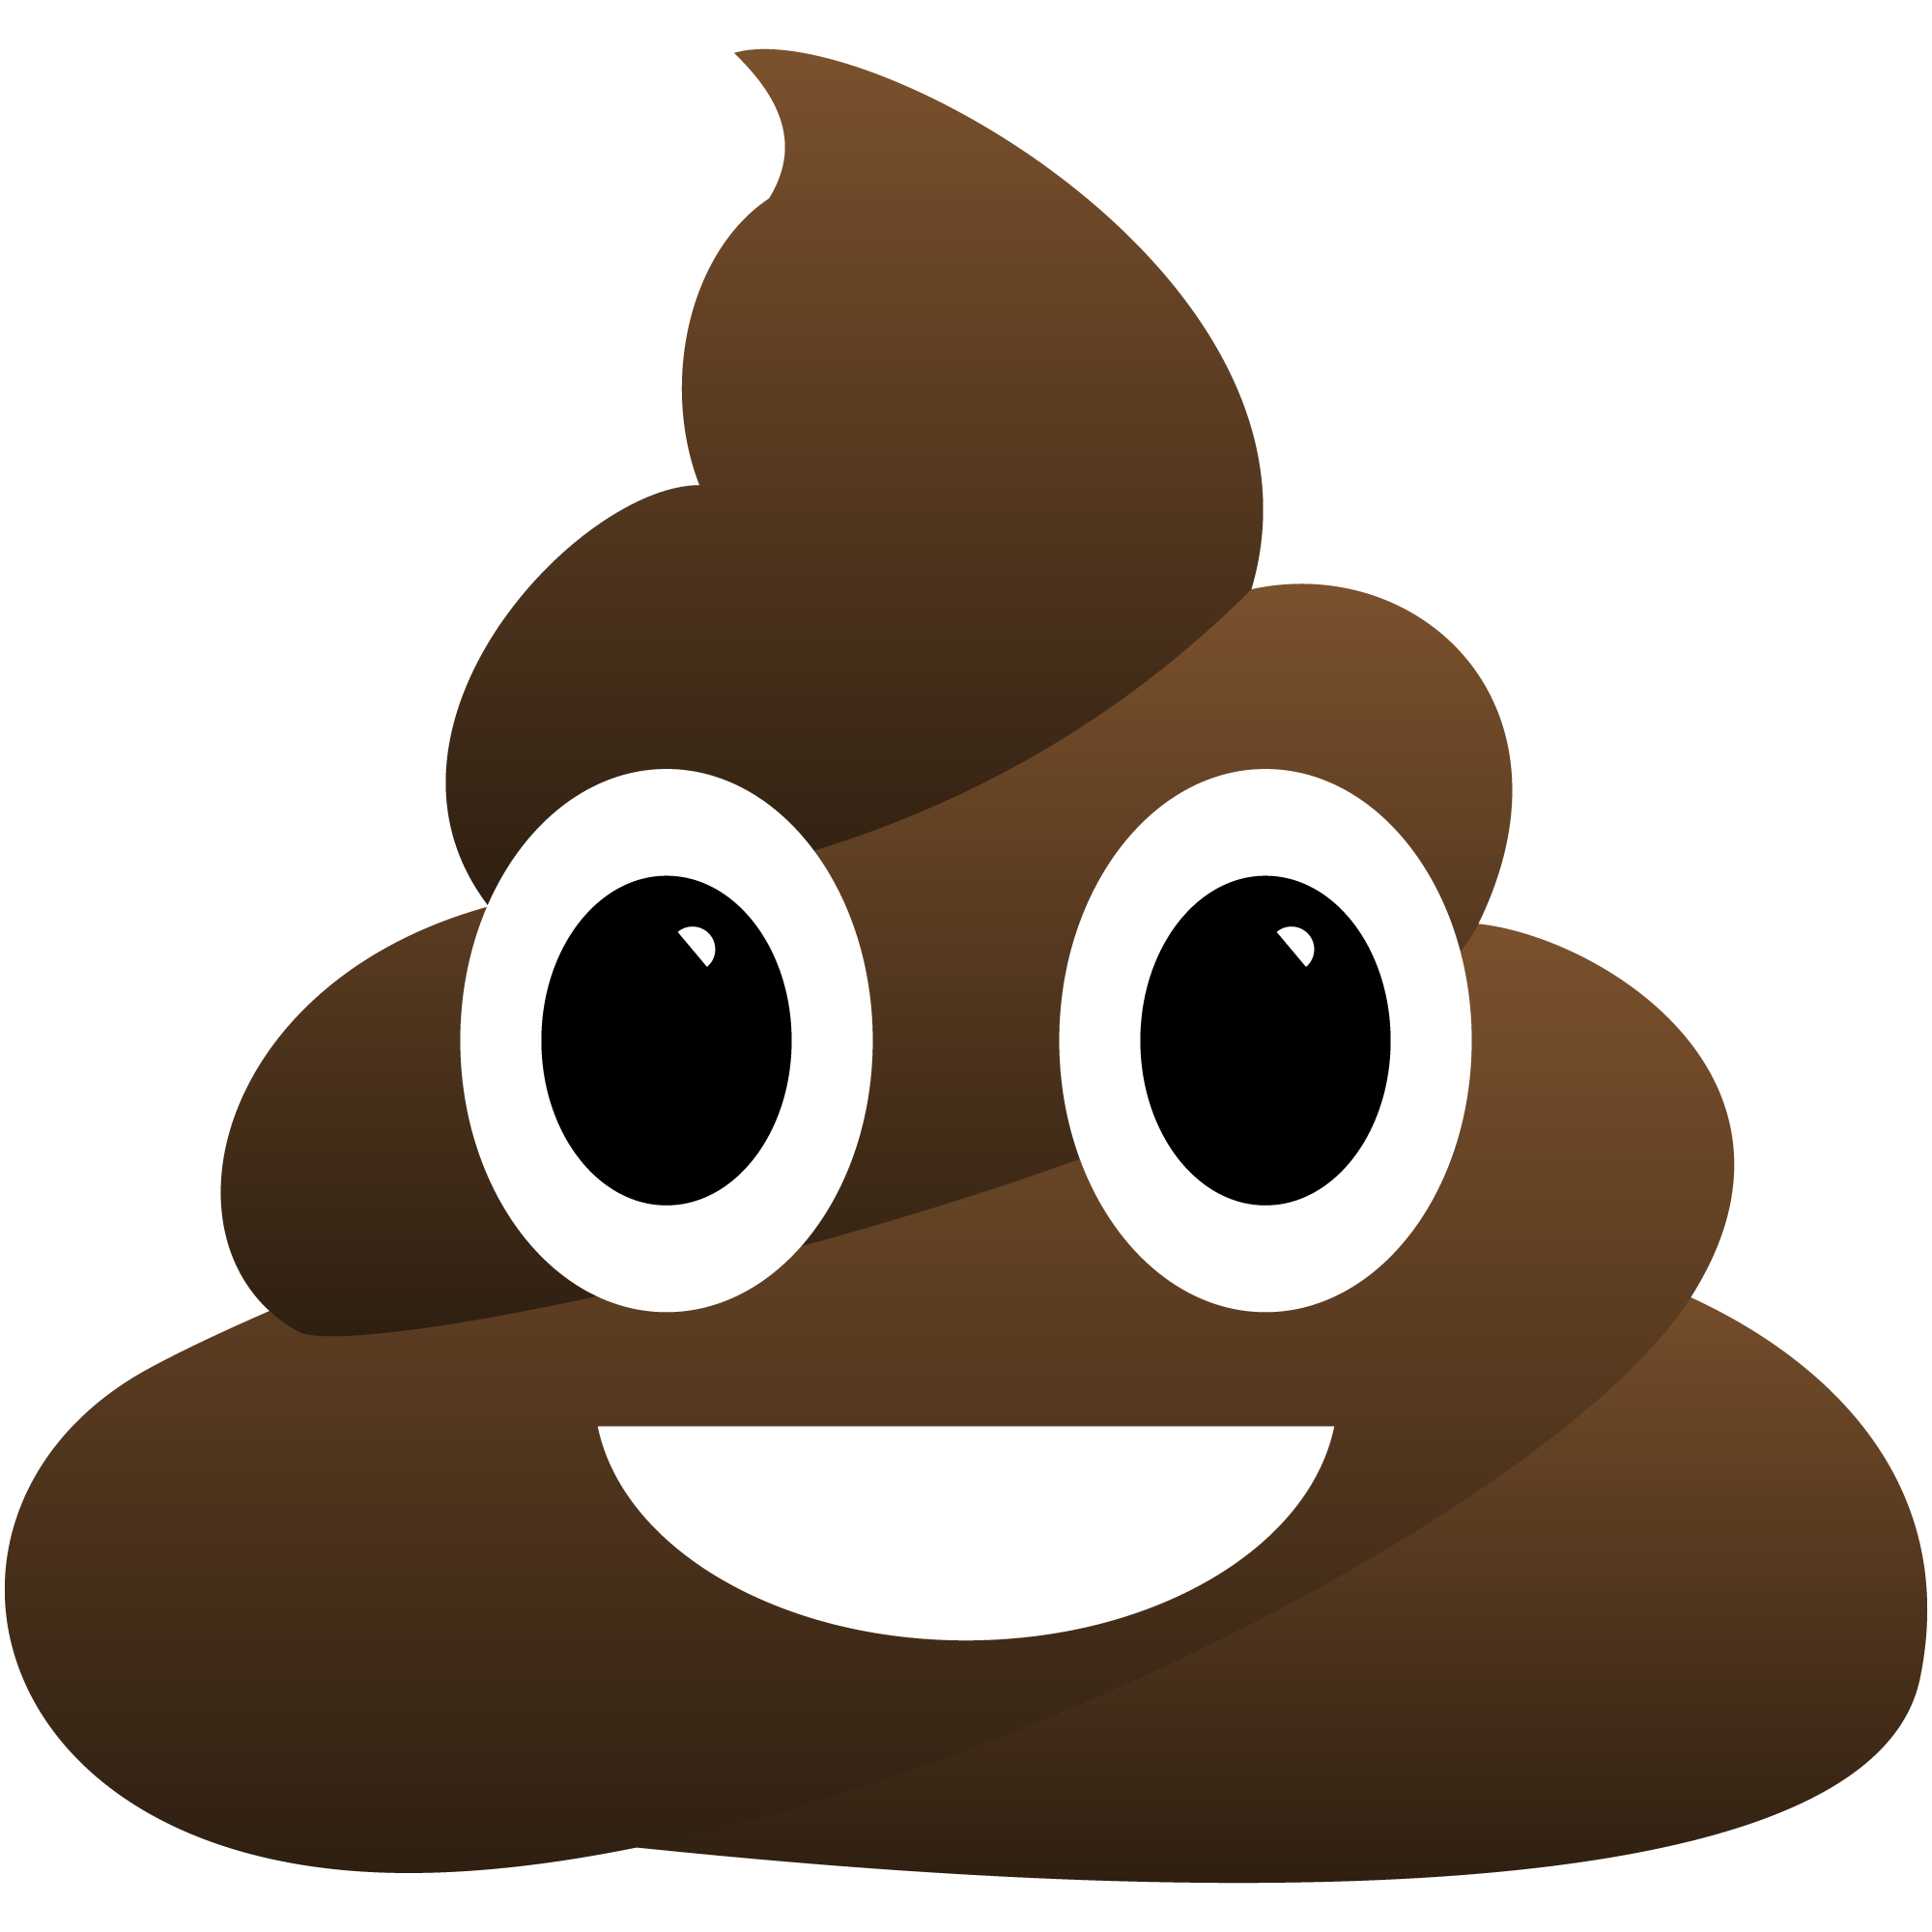 Poop PNG Transparent Images - PNG All